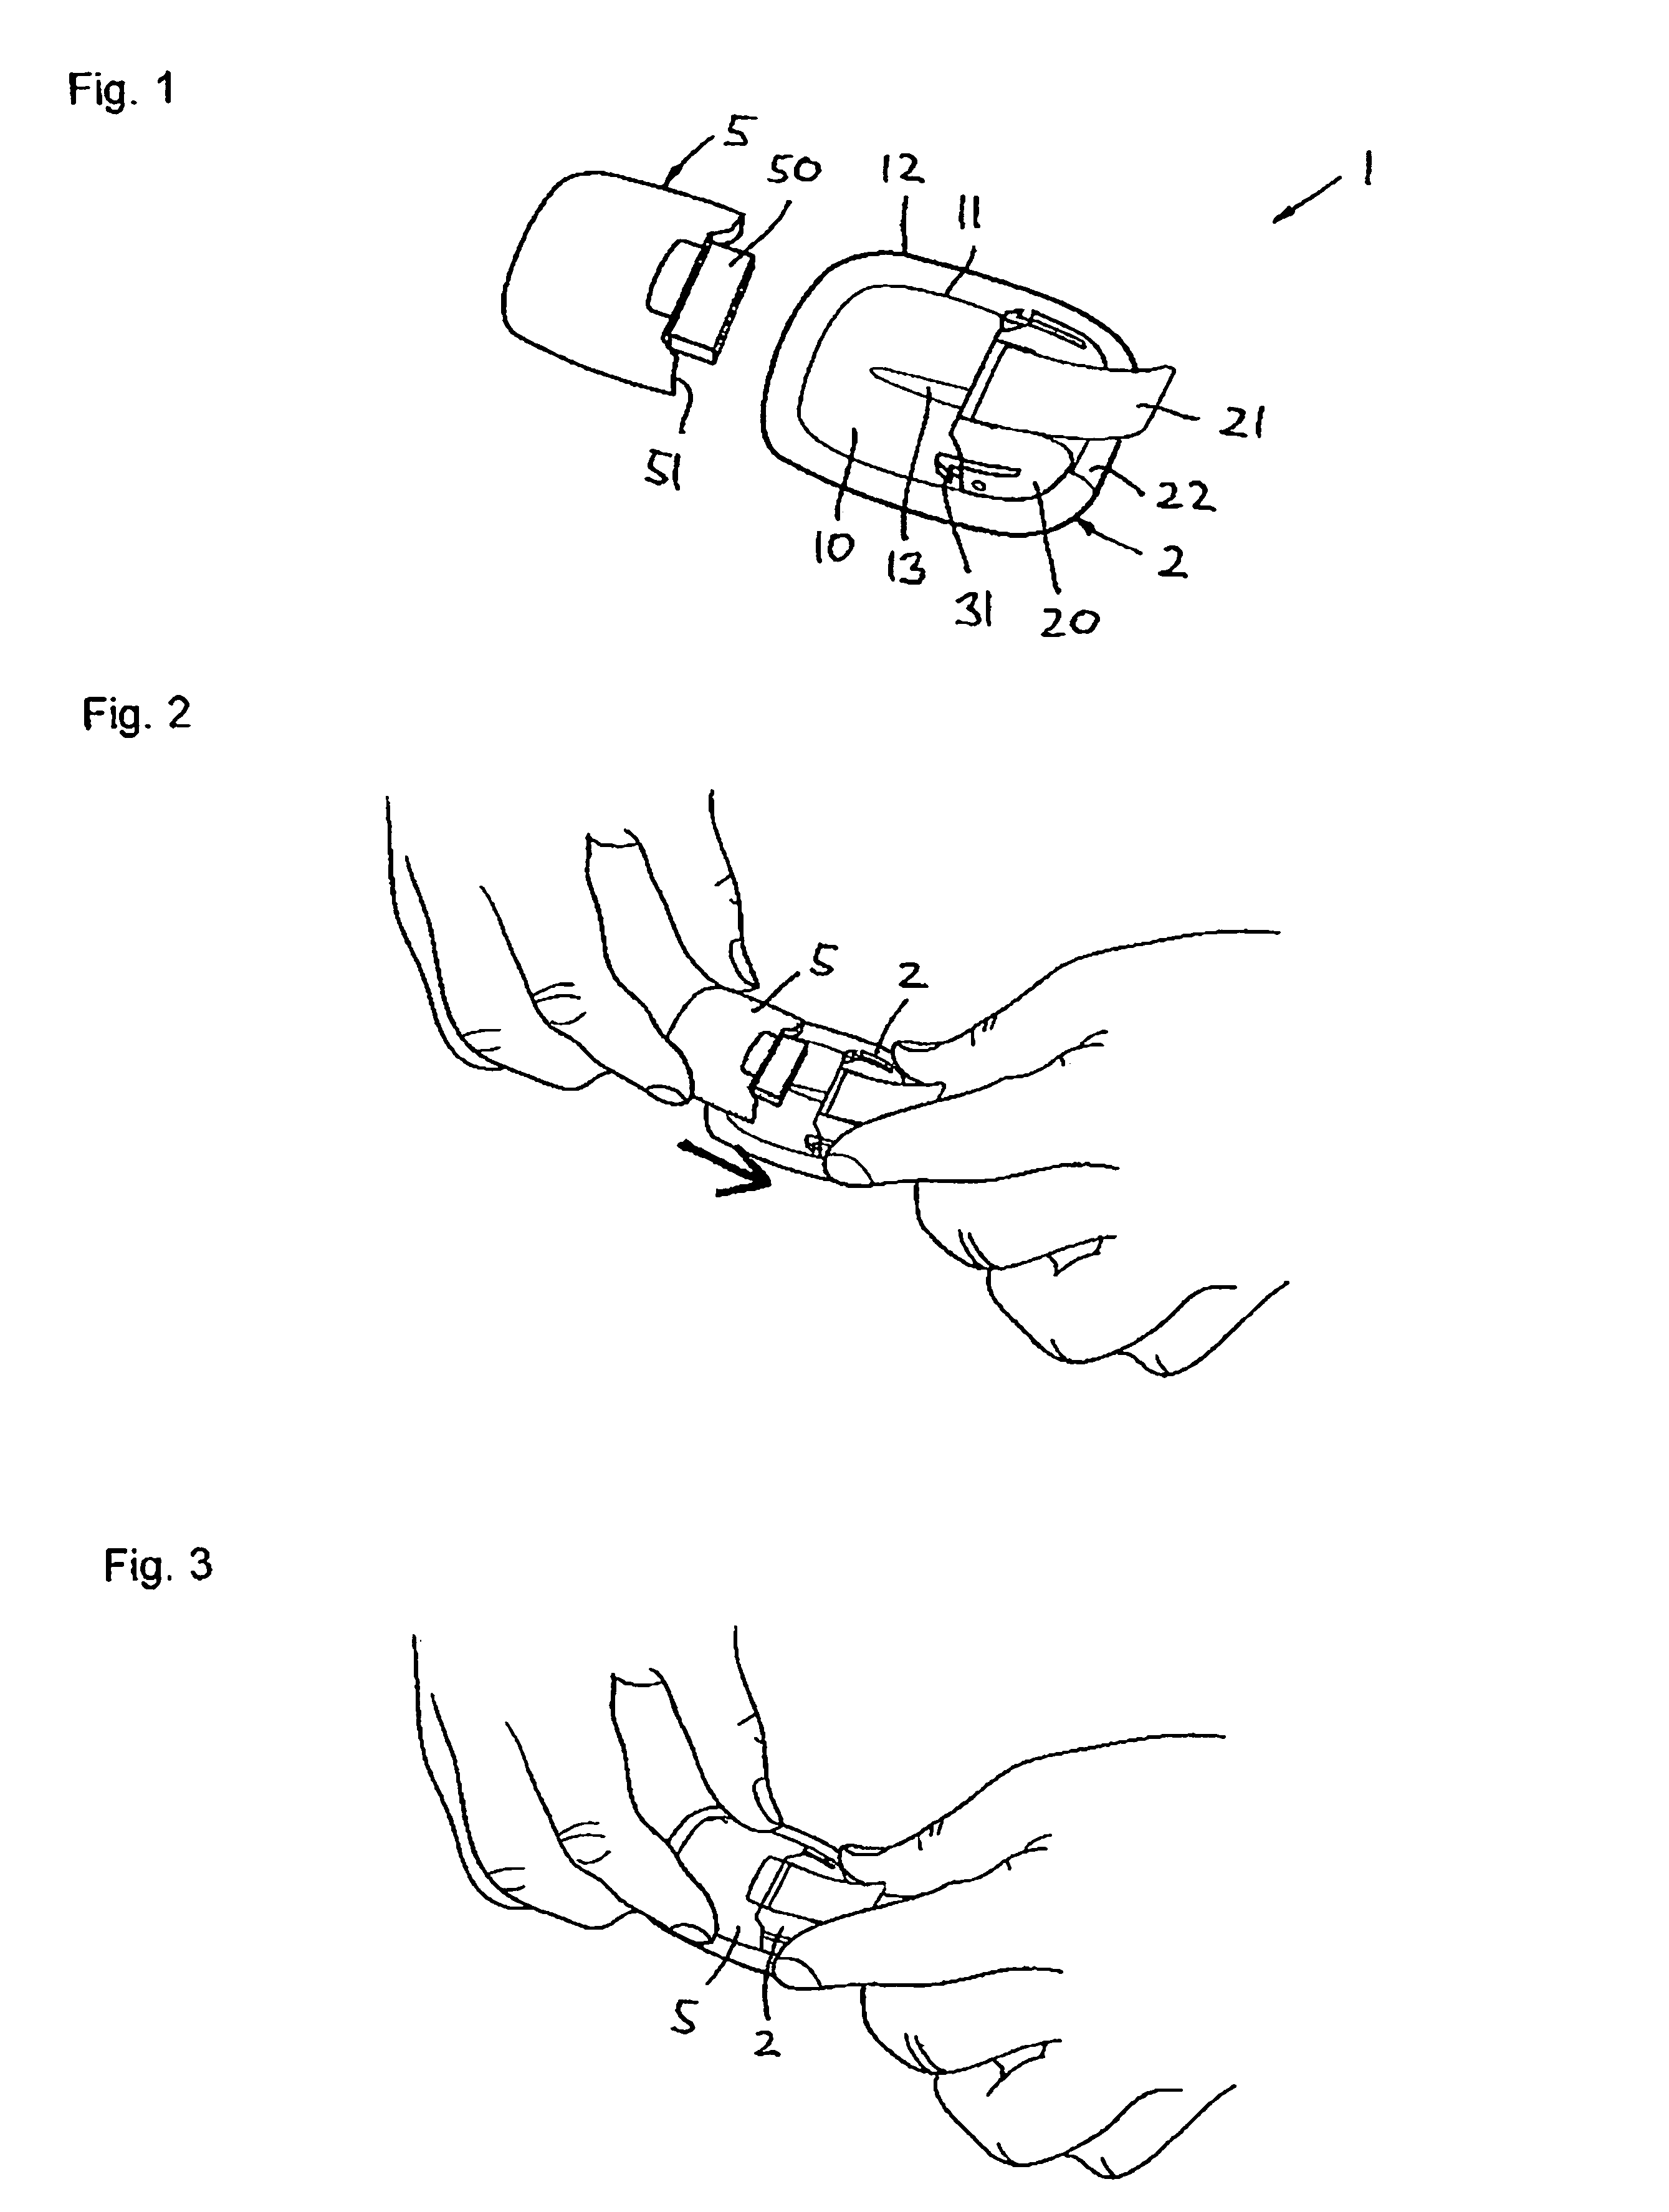 Internal fluid connector